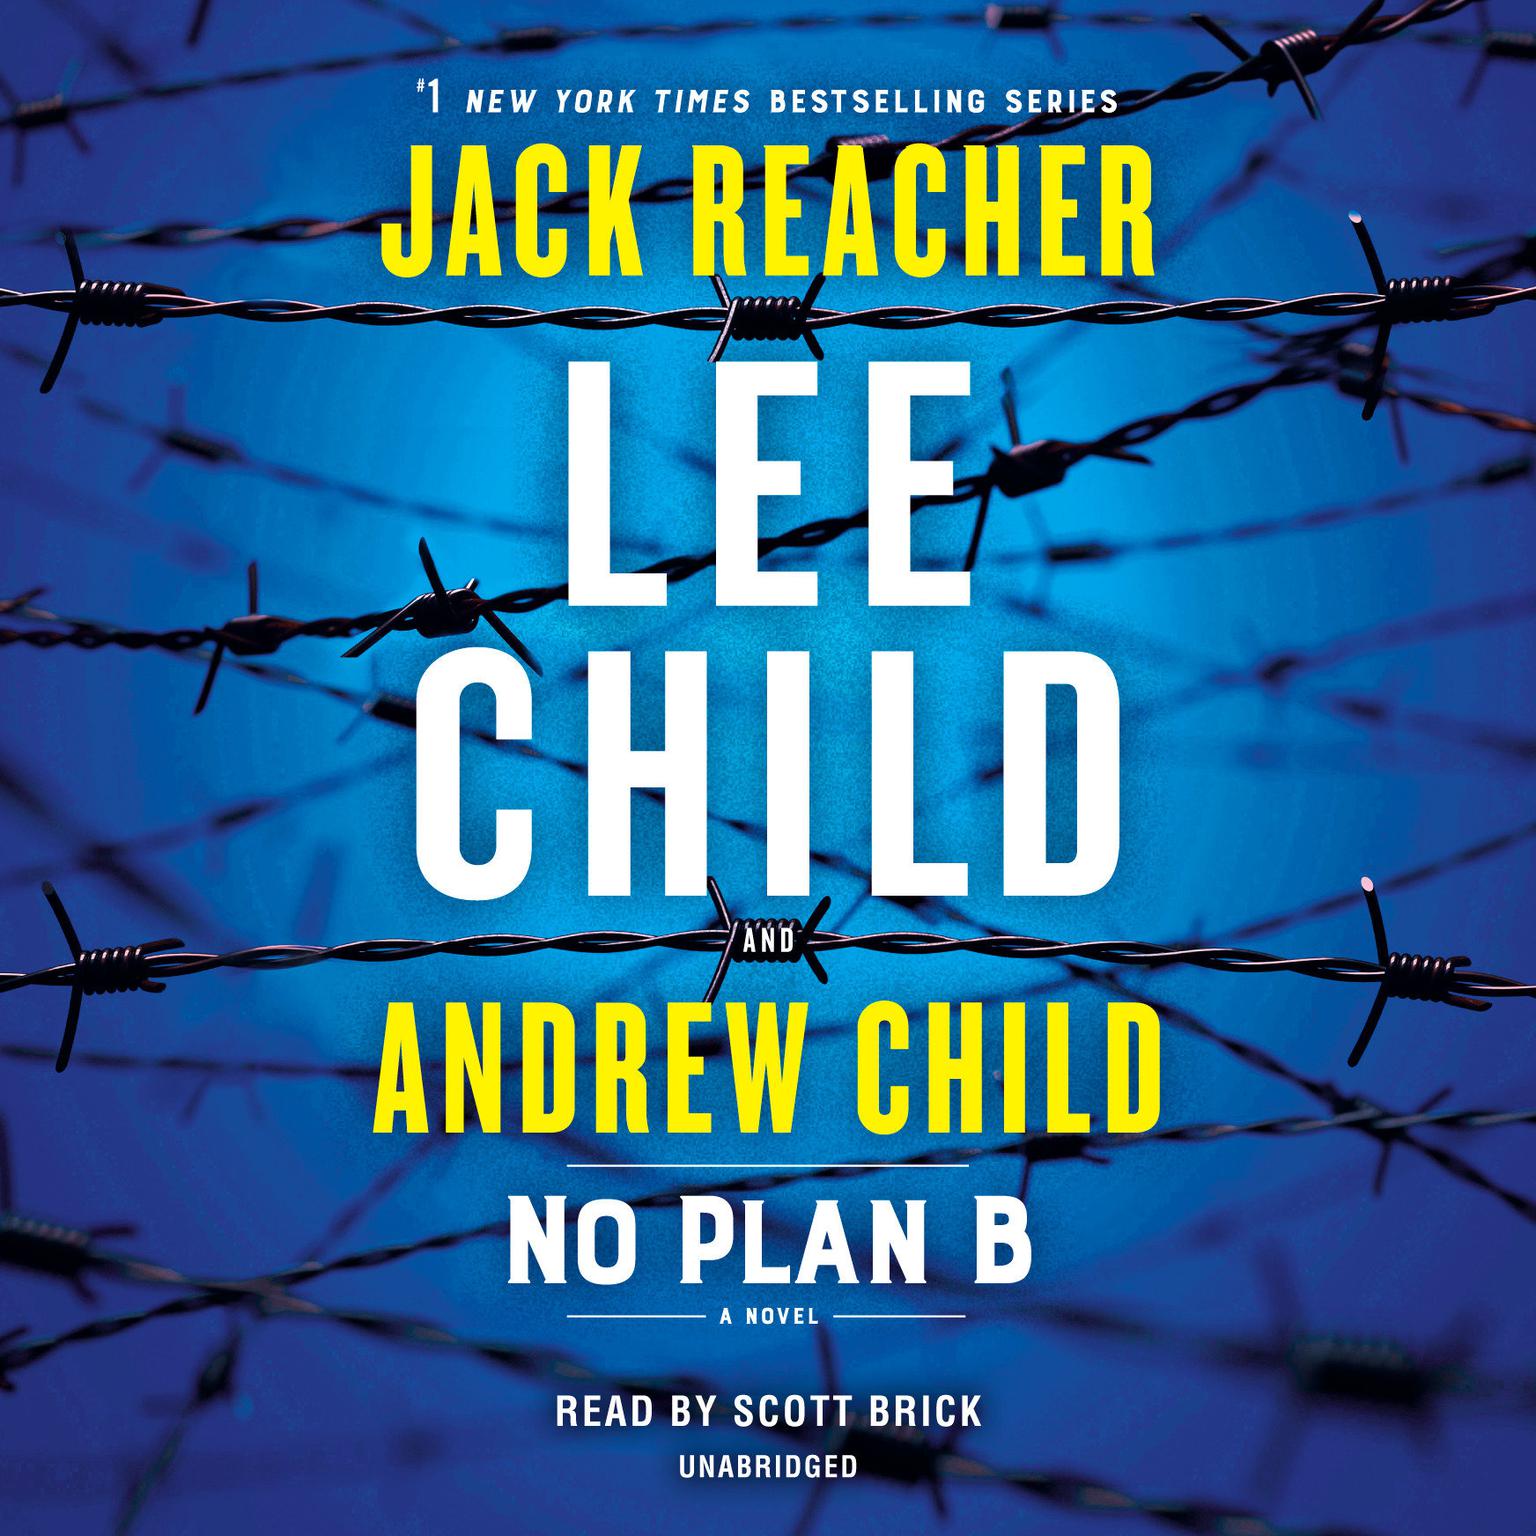 No Plan B: A Jack Reacher Novel Audiobook, by Lee Child